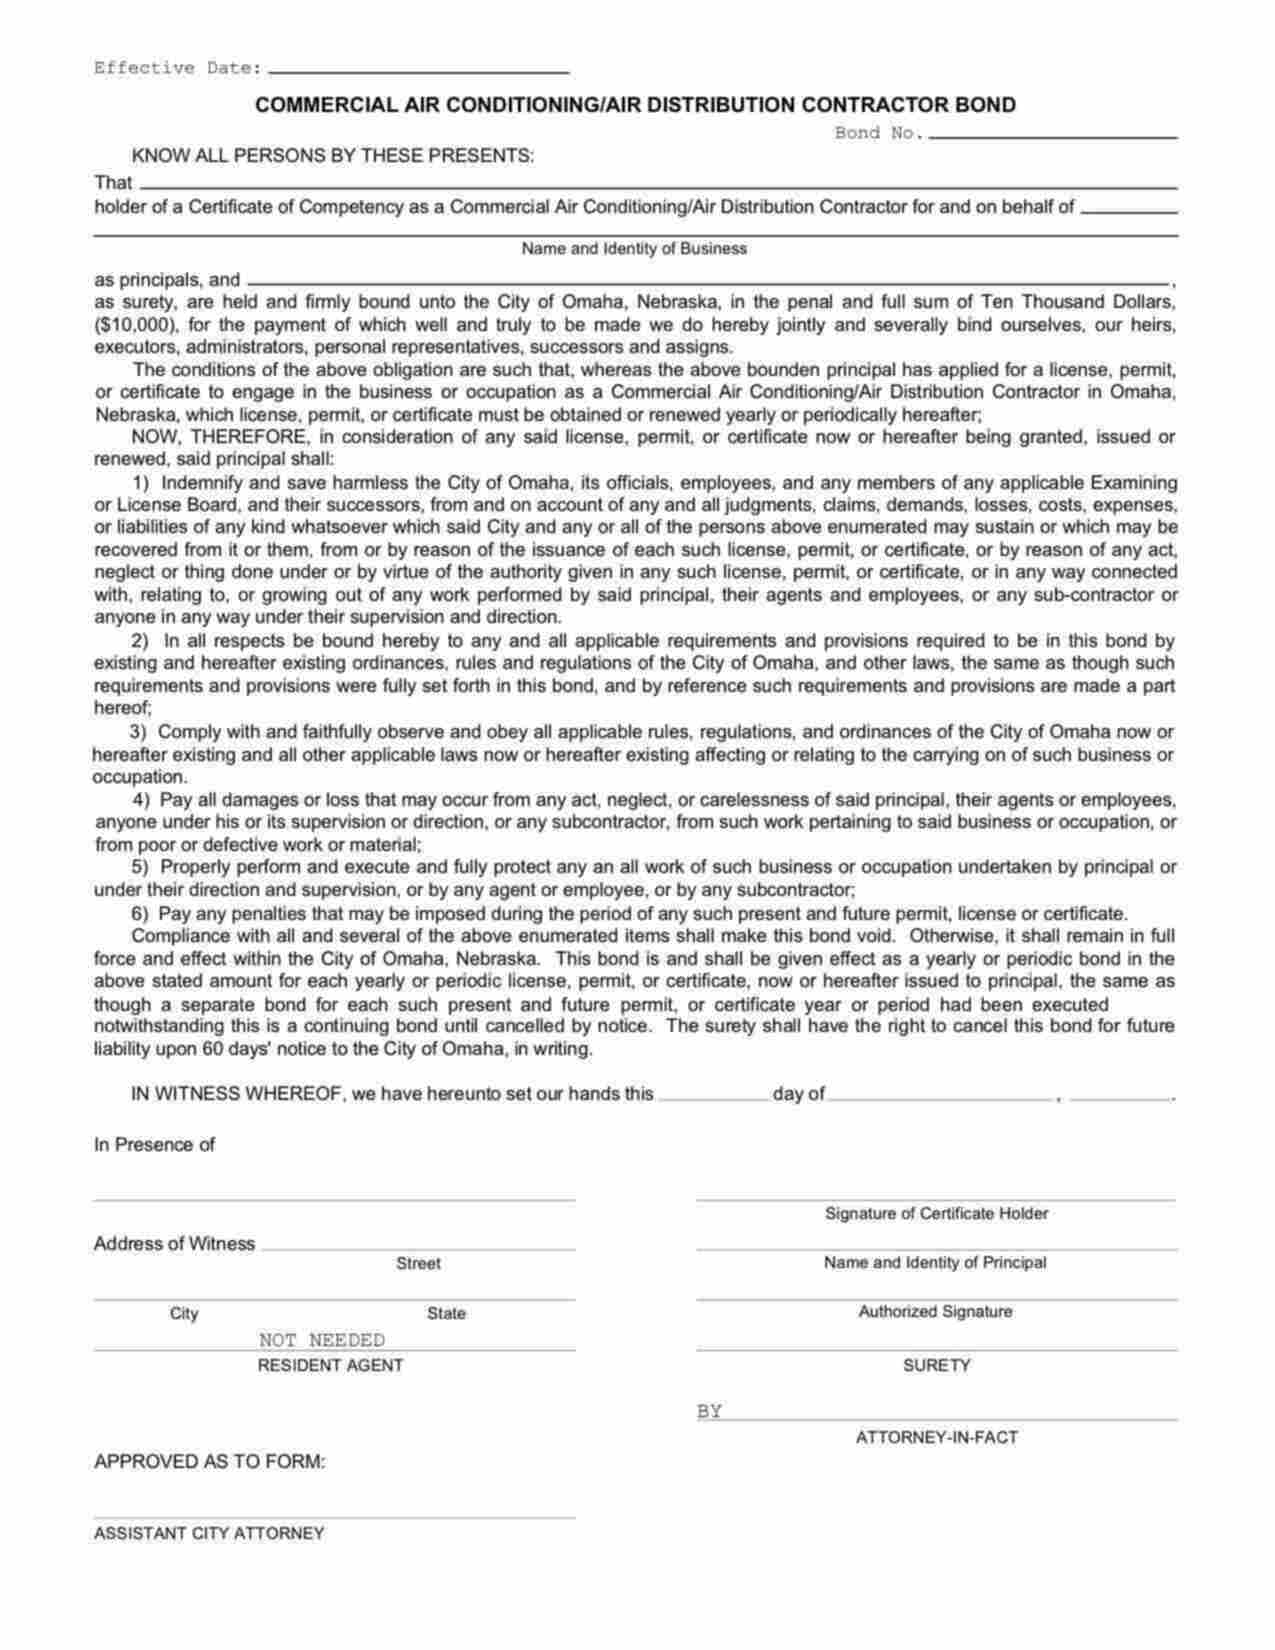 Nebraska Commercial Air Conditioning/Air Distribution Contractor Bond Form